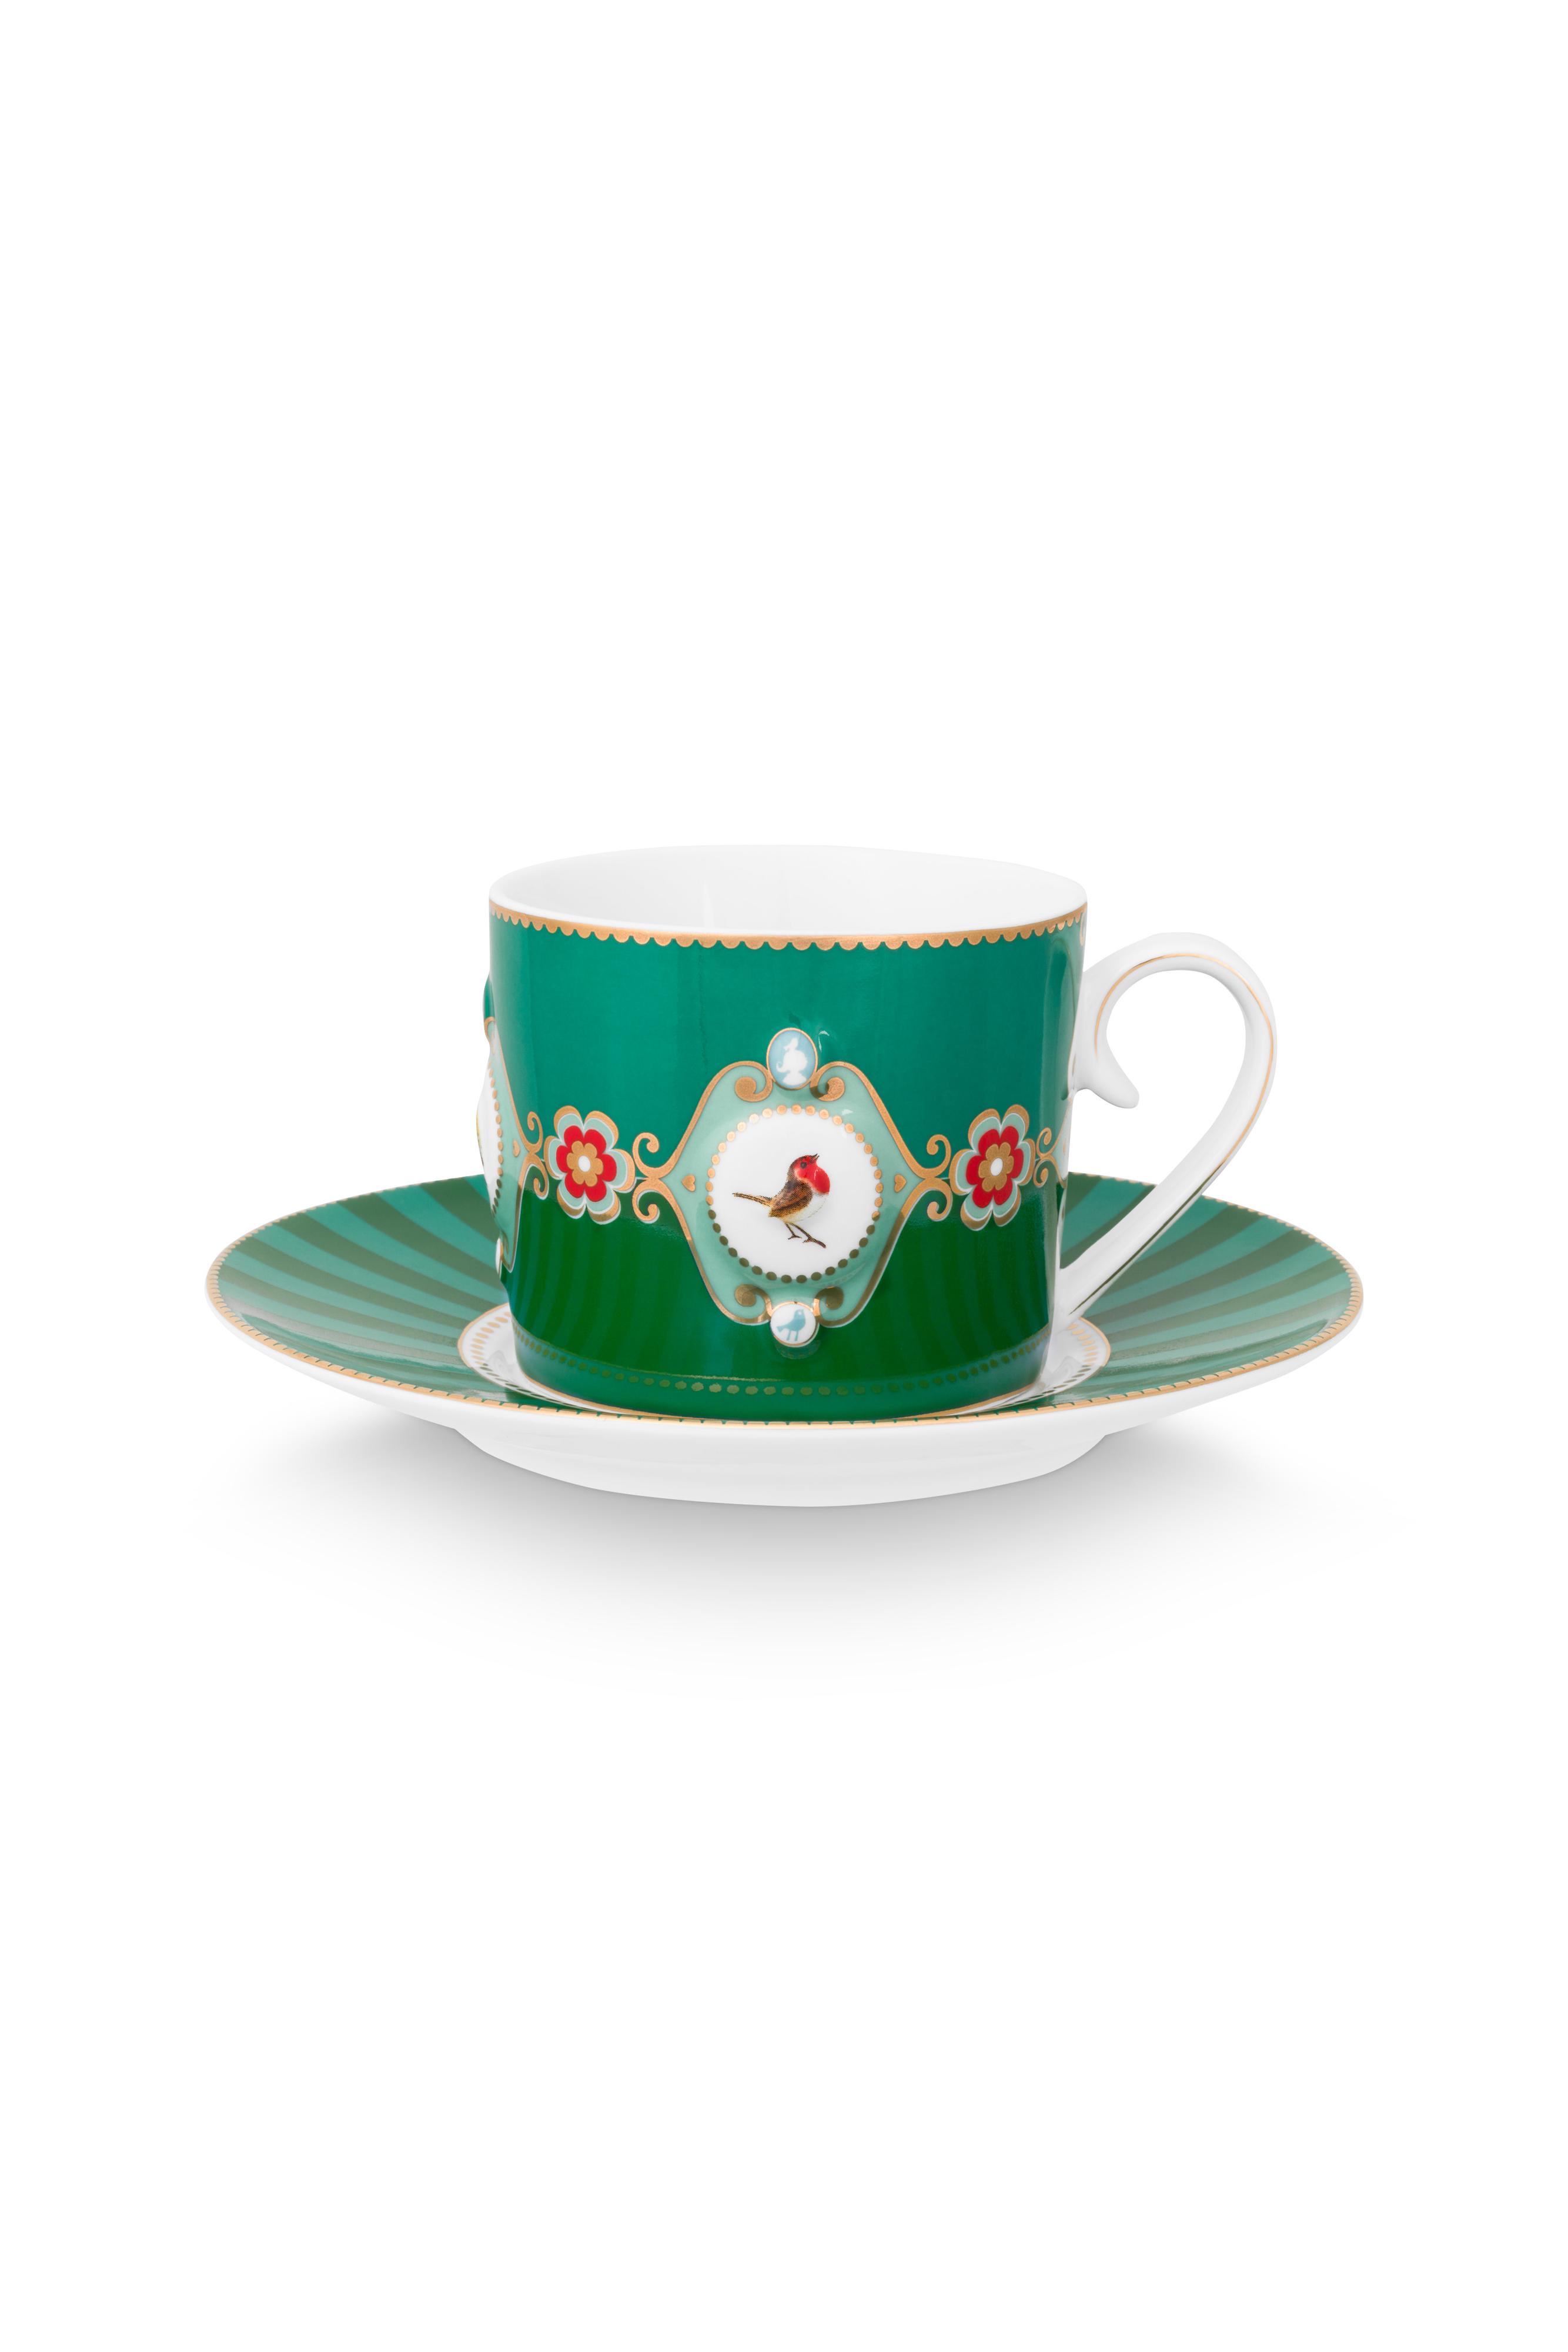 Cup - Saucer Love Birds Medallion -green 200ml Gift